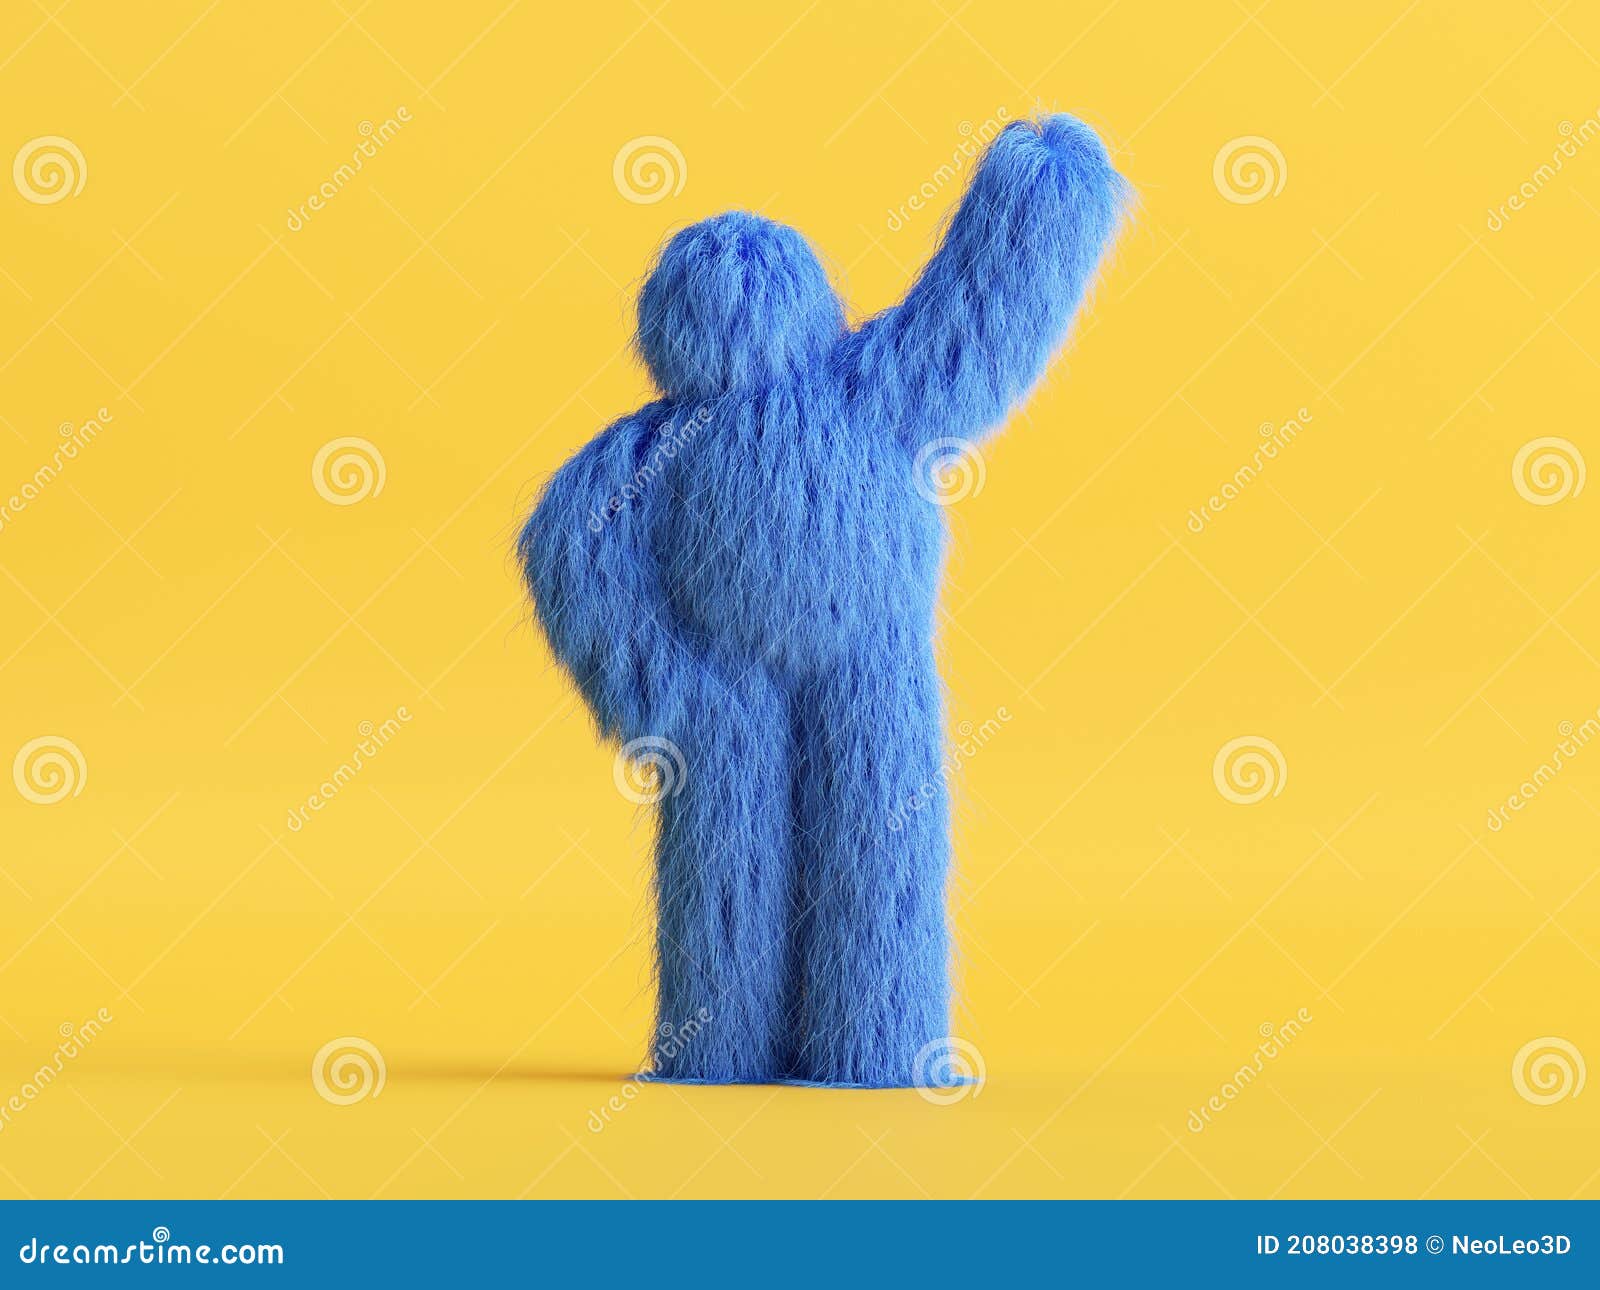 Hairy toying. Танцующая лохматая игрушка. Танцующий мохнатая игрушка. Голубая мохнатая игрушка. Лохматая синяя игрушка.